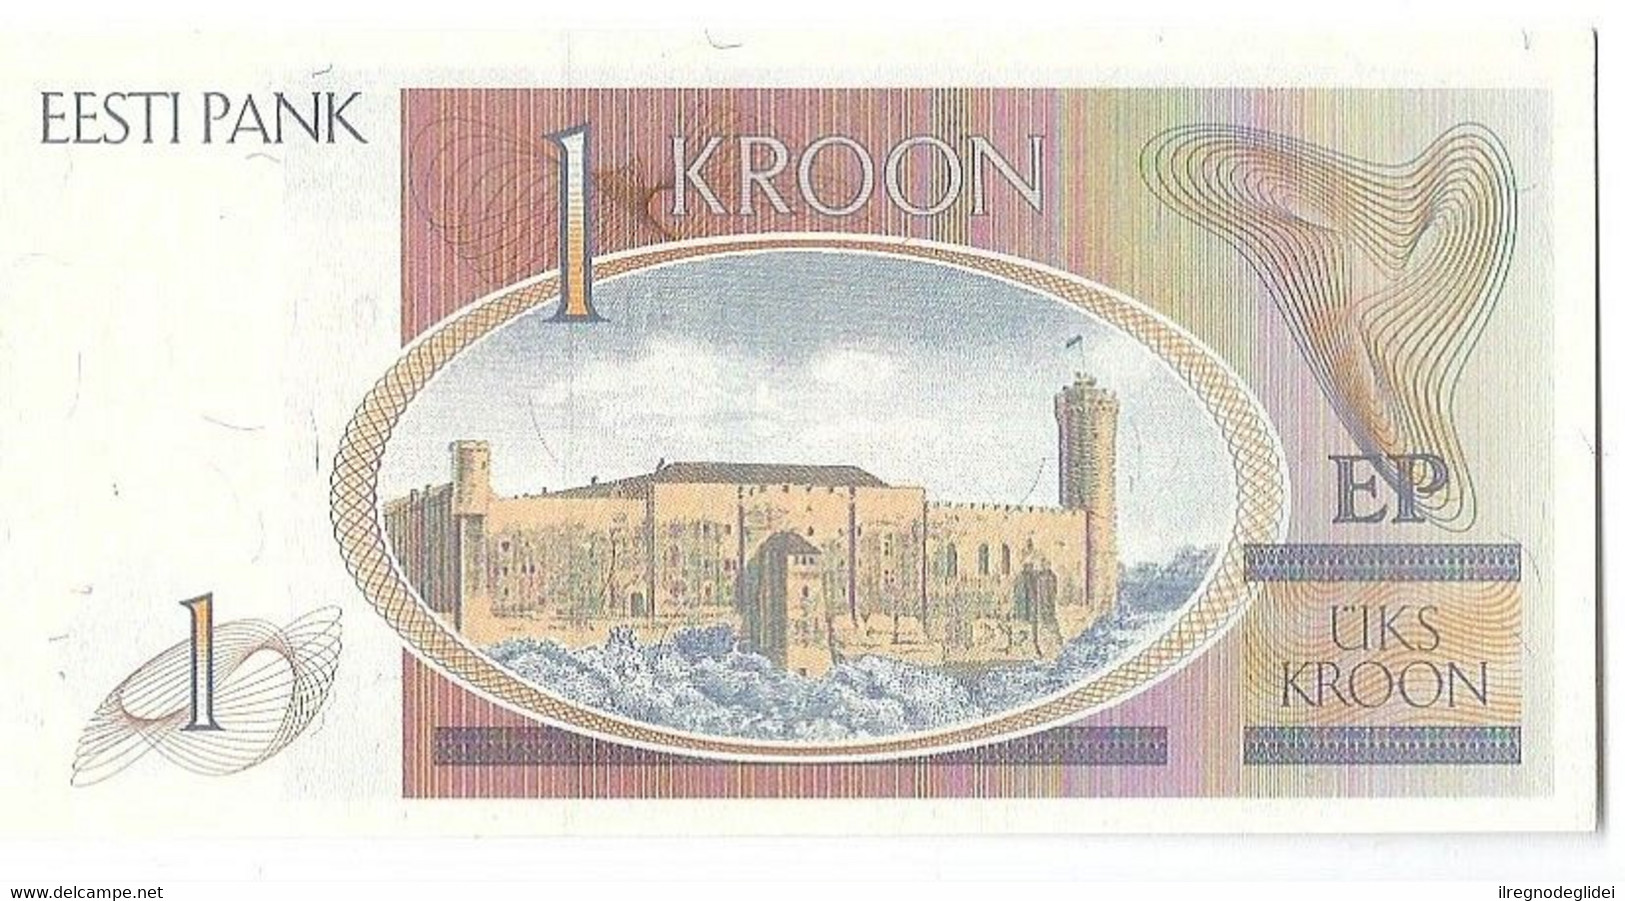 ESTONIA - 1 KORONA KROON - WYSIWYG - N° SERIALE AD1061260 - CARTAMONETA - PAPER MONEY - Estland